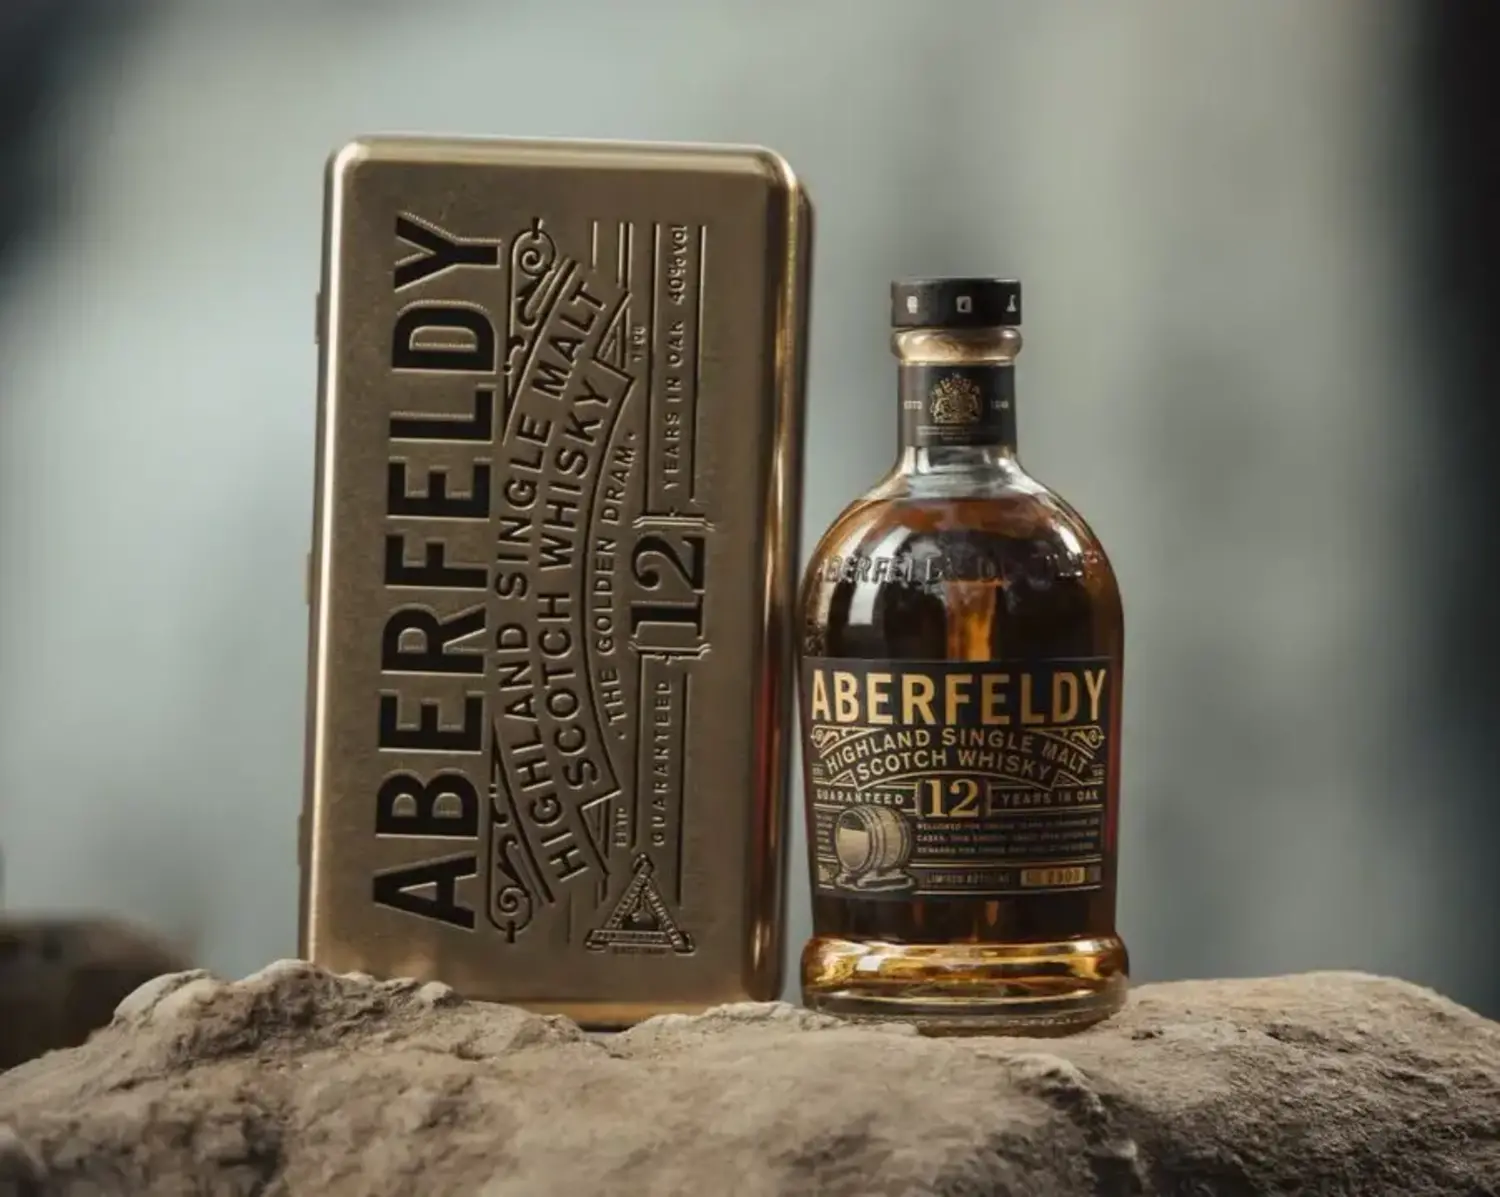 Aberfeldy - 12 Year Old Highland Single Malt Scotch Whisky